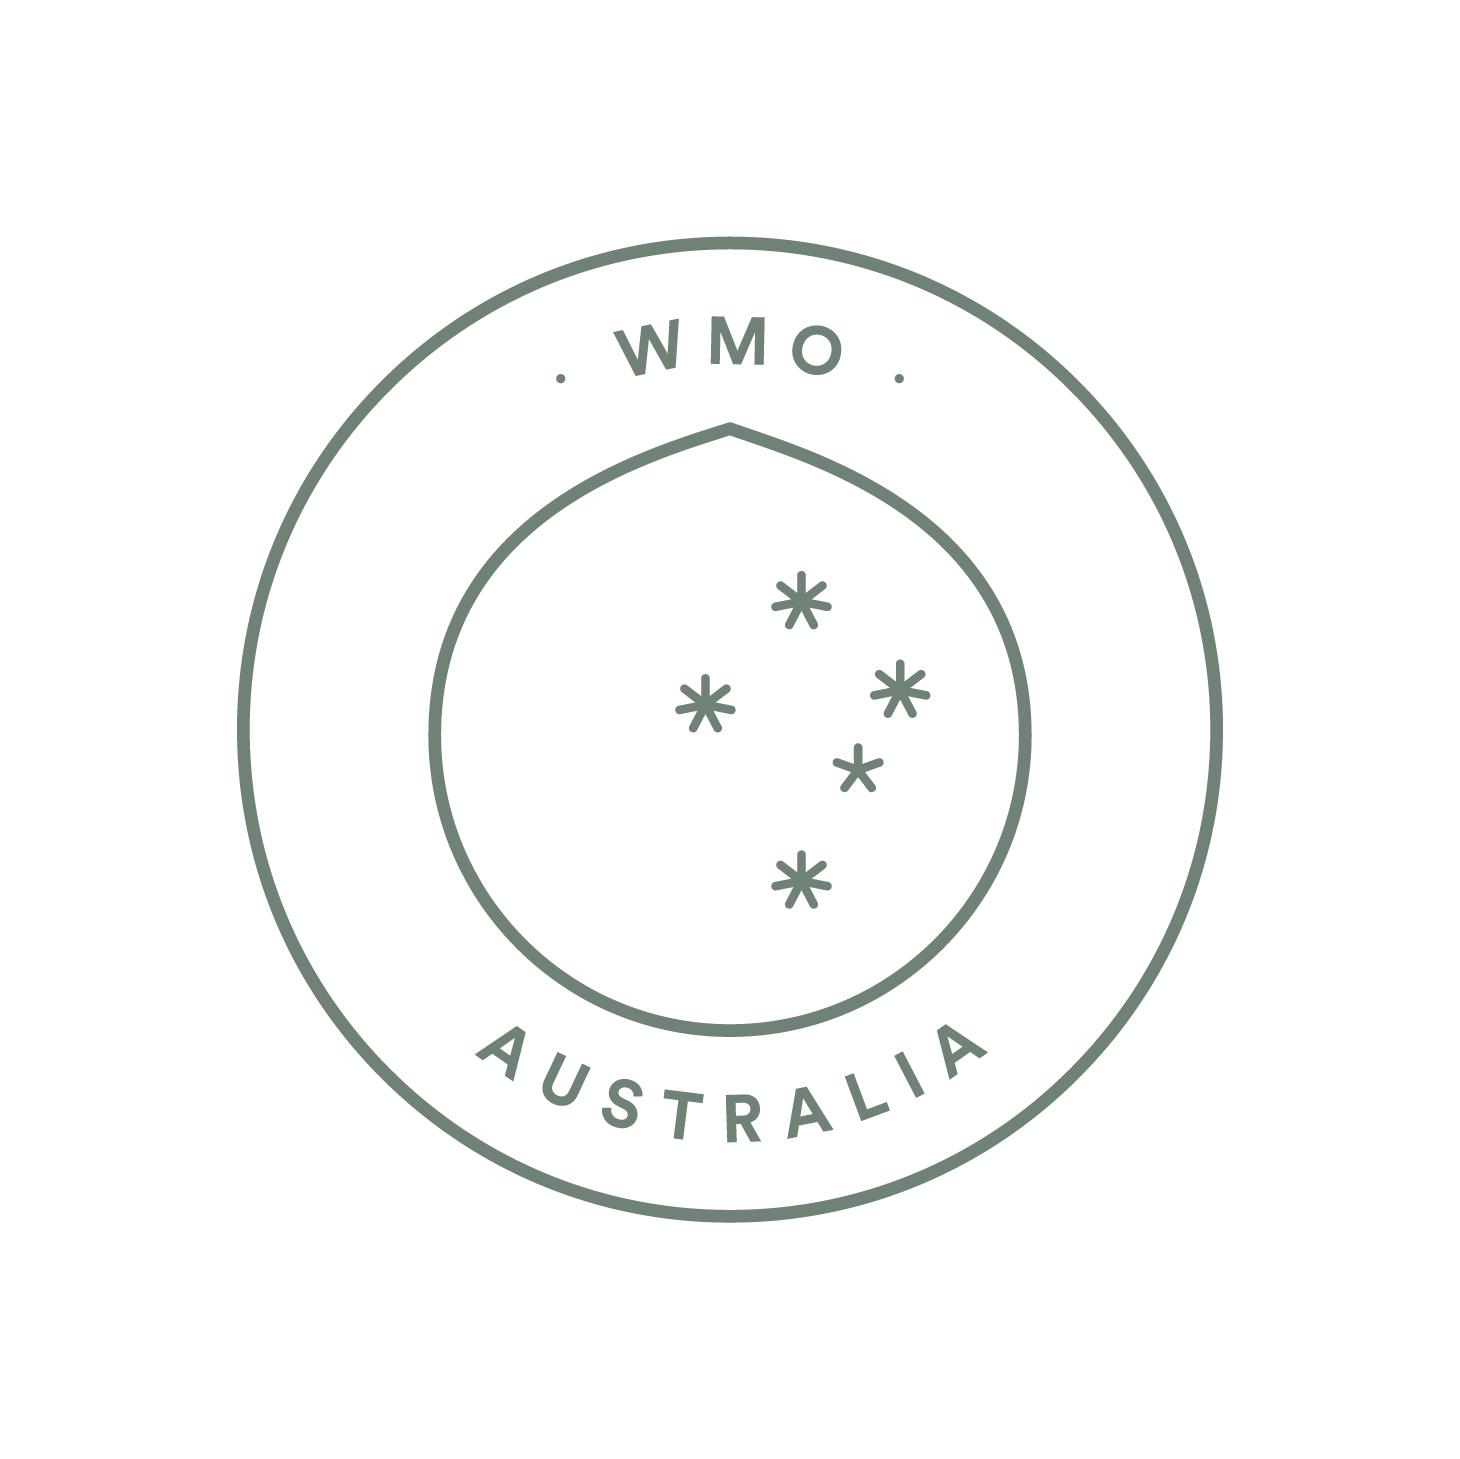 Australia World Macadamia Organisation member